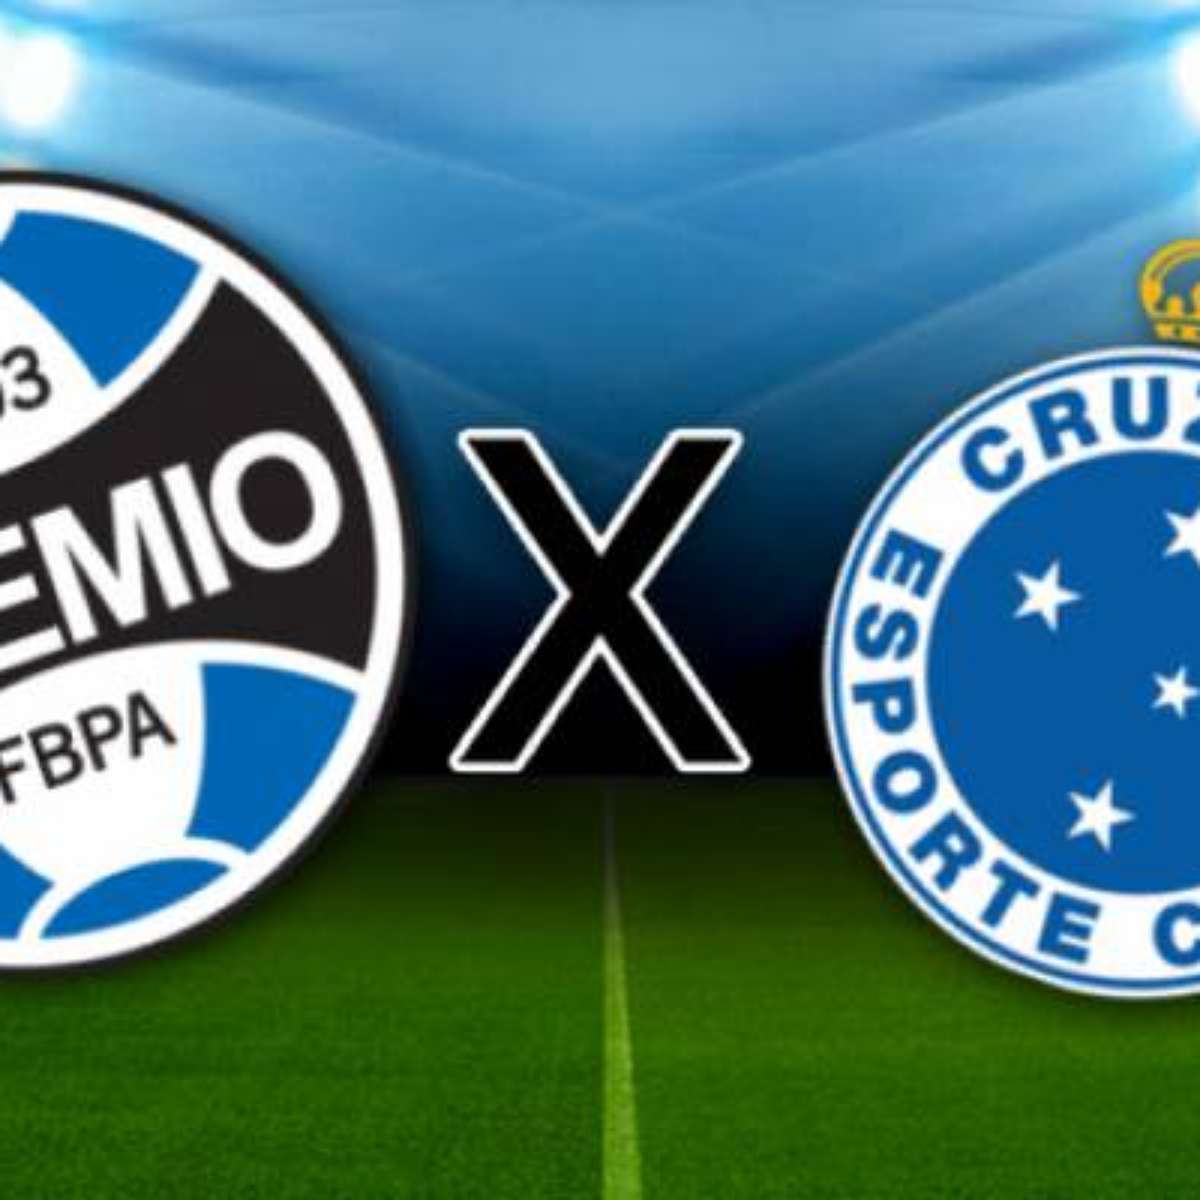 Cruzeiro vs América MG: A Classic Rivalry in Brazilian Football